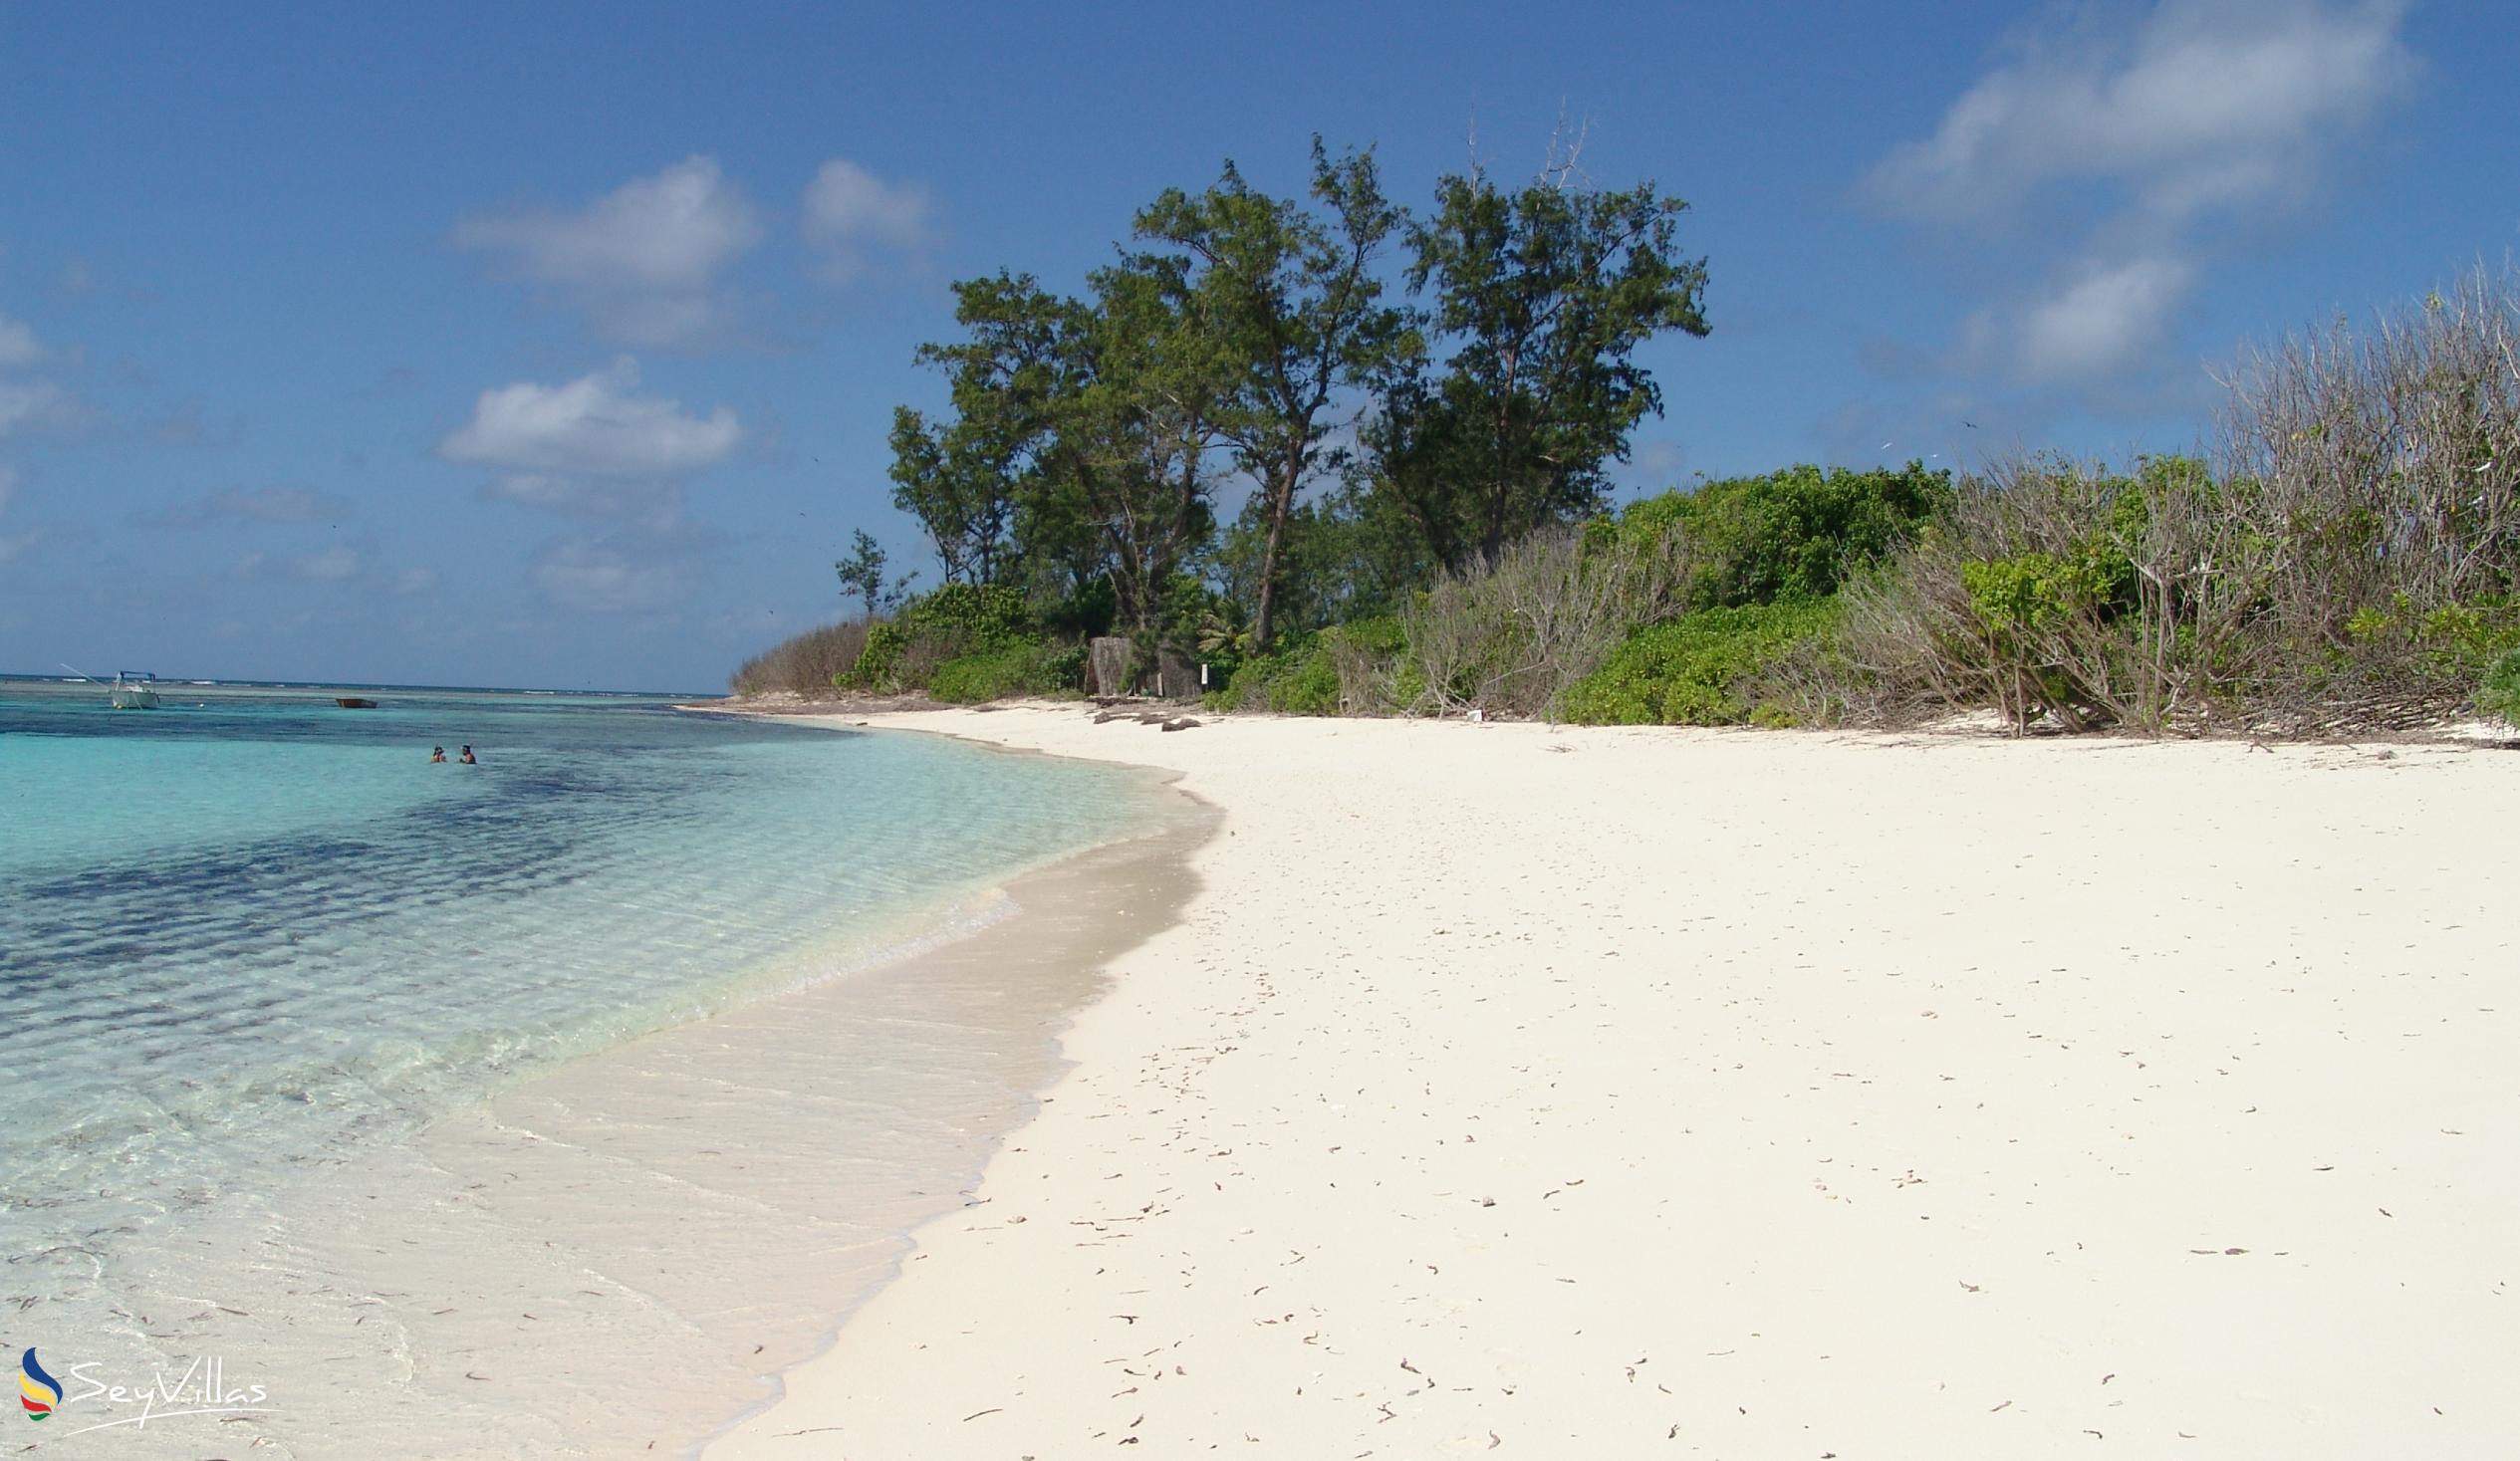 Photo 4: Bird Island Beaches - Other islands (Seychelles)